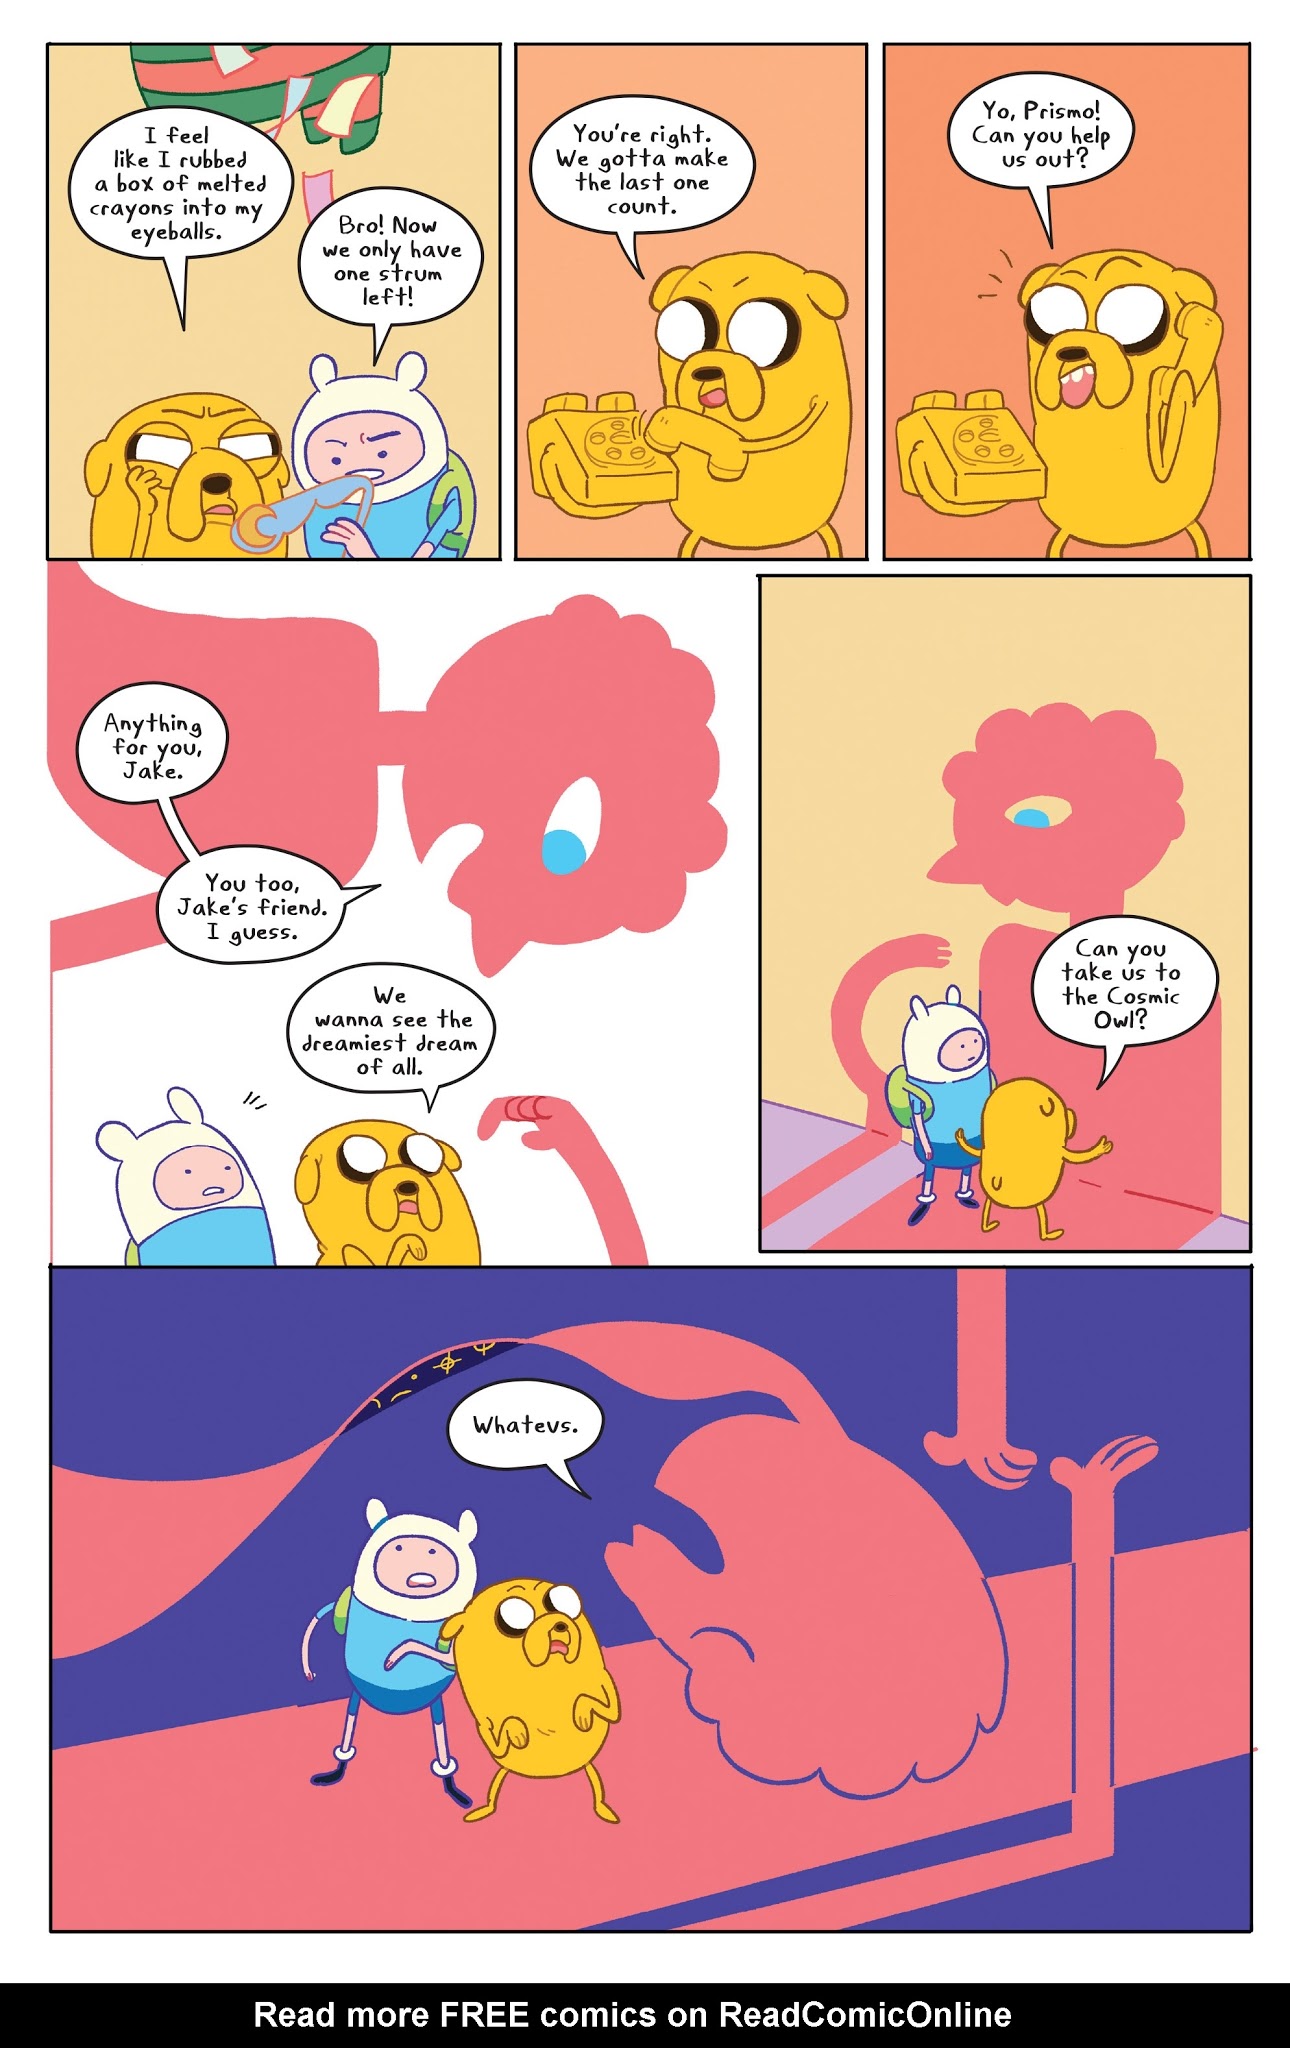 Adventure Time Comics Issue 18 | Read Adventure Time Comics Issue 18 comic  online in high quality. Read Full Comic online for free - Read comics  online in high quality .| READ COMIC ONLINE